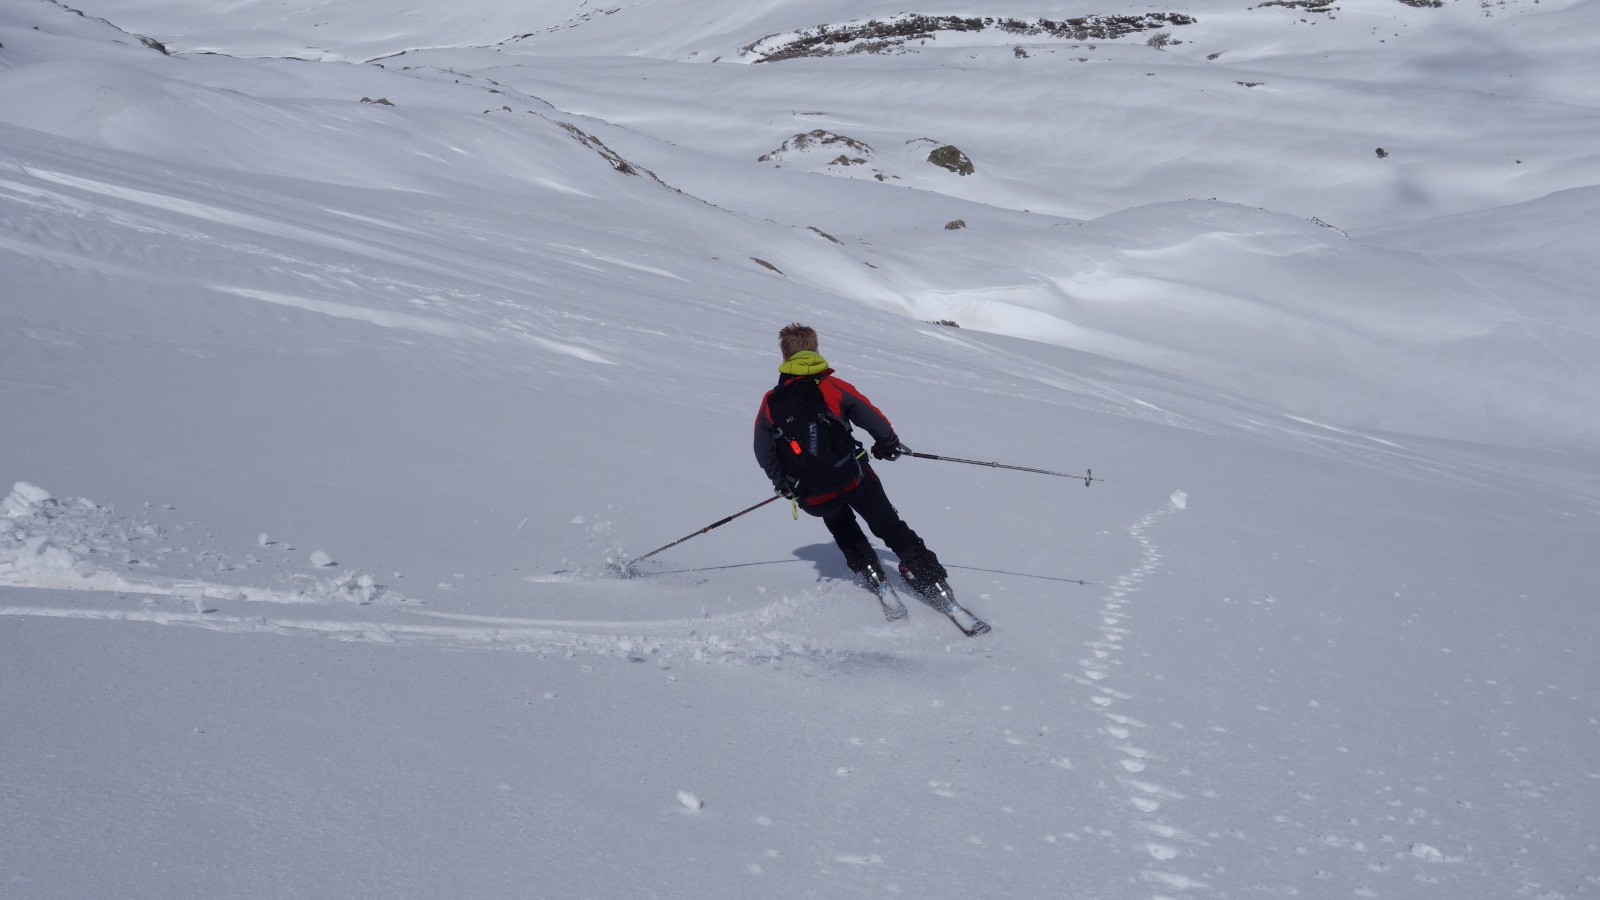 Toujours du bon ski